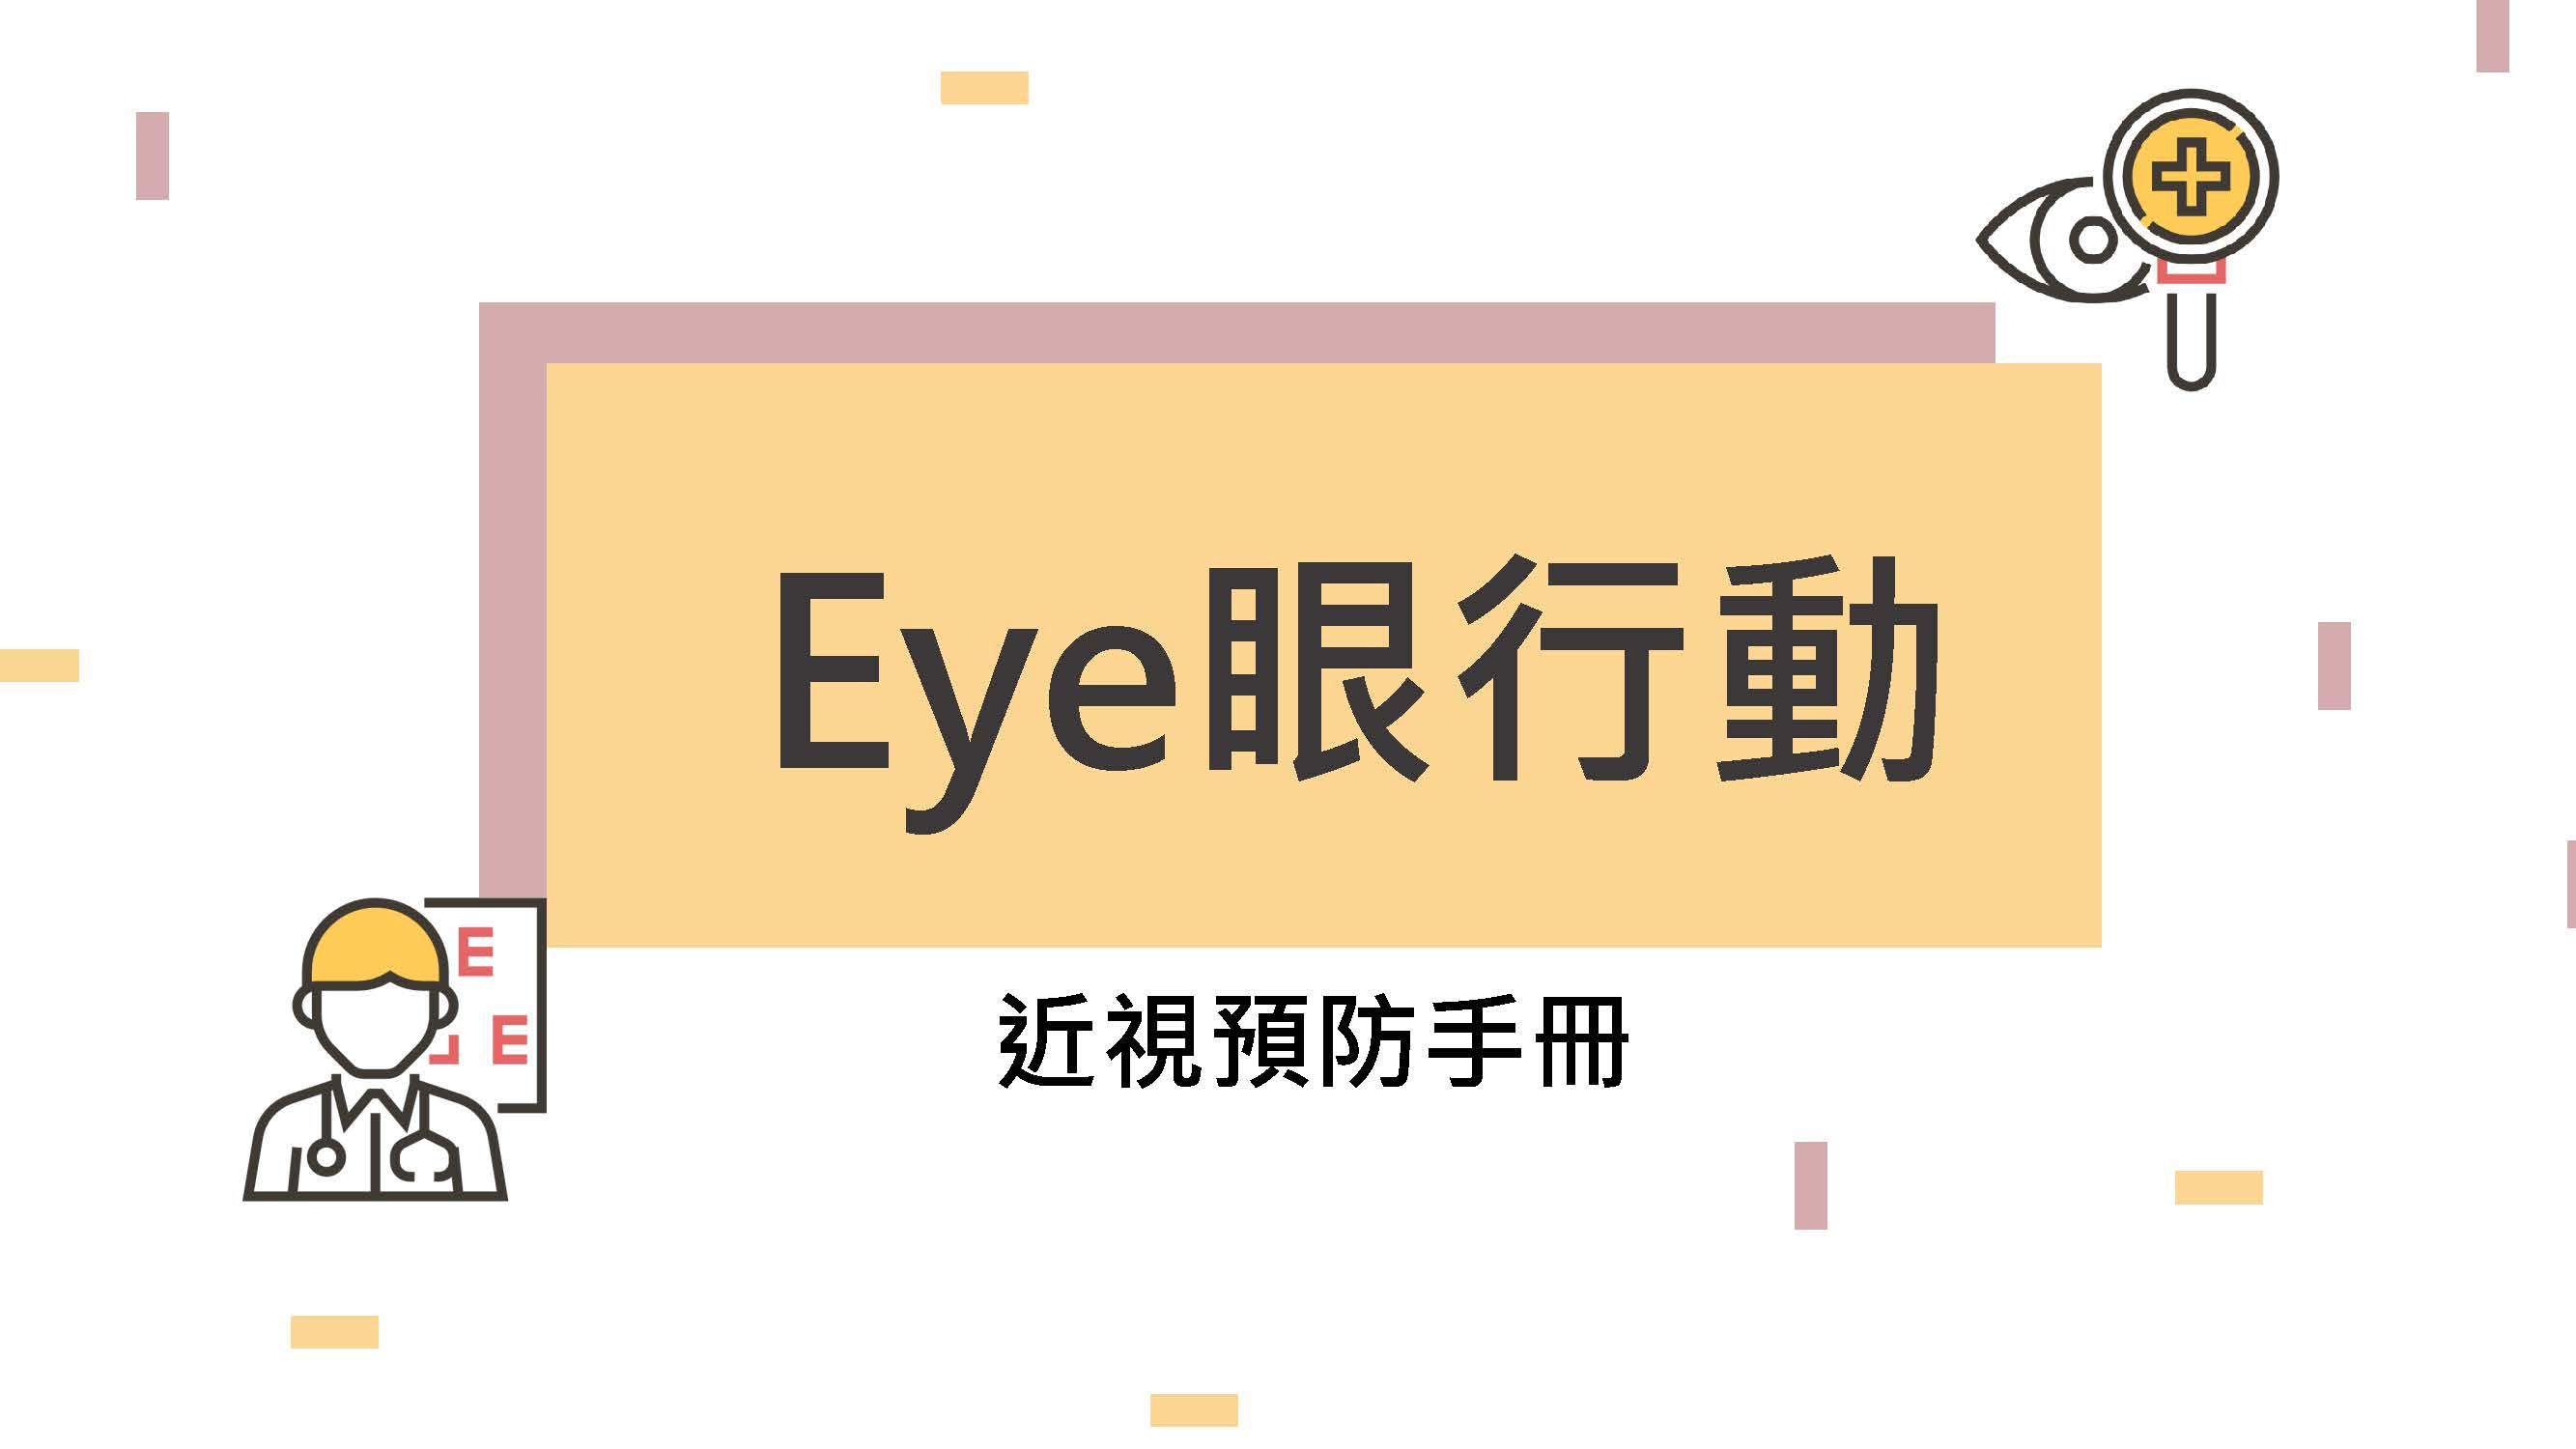 "Eye 眼行動"：視力保健